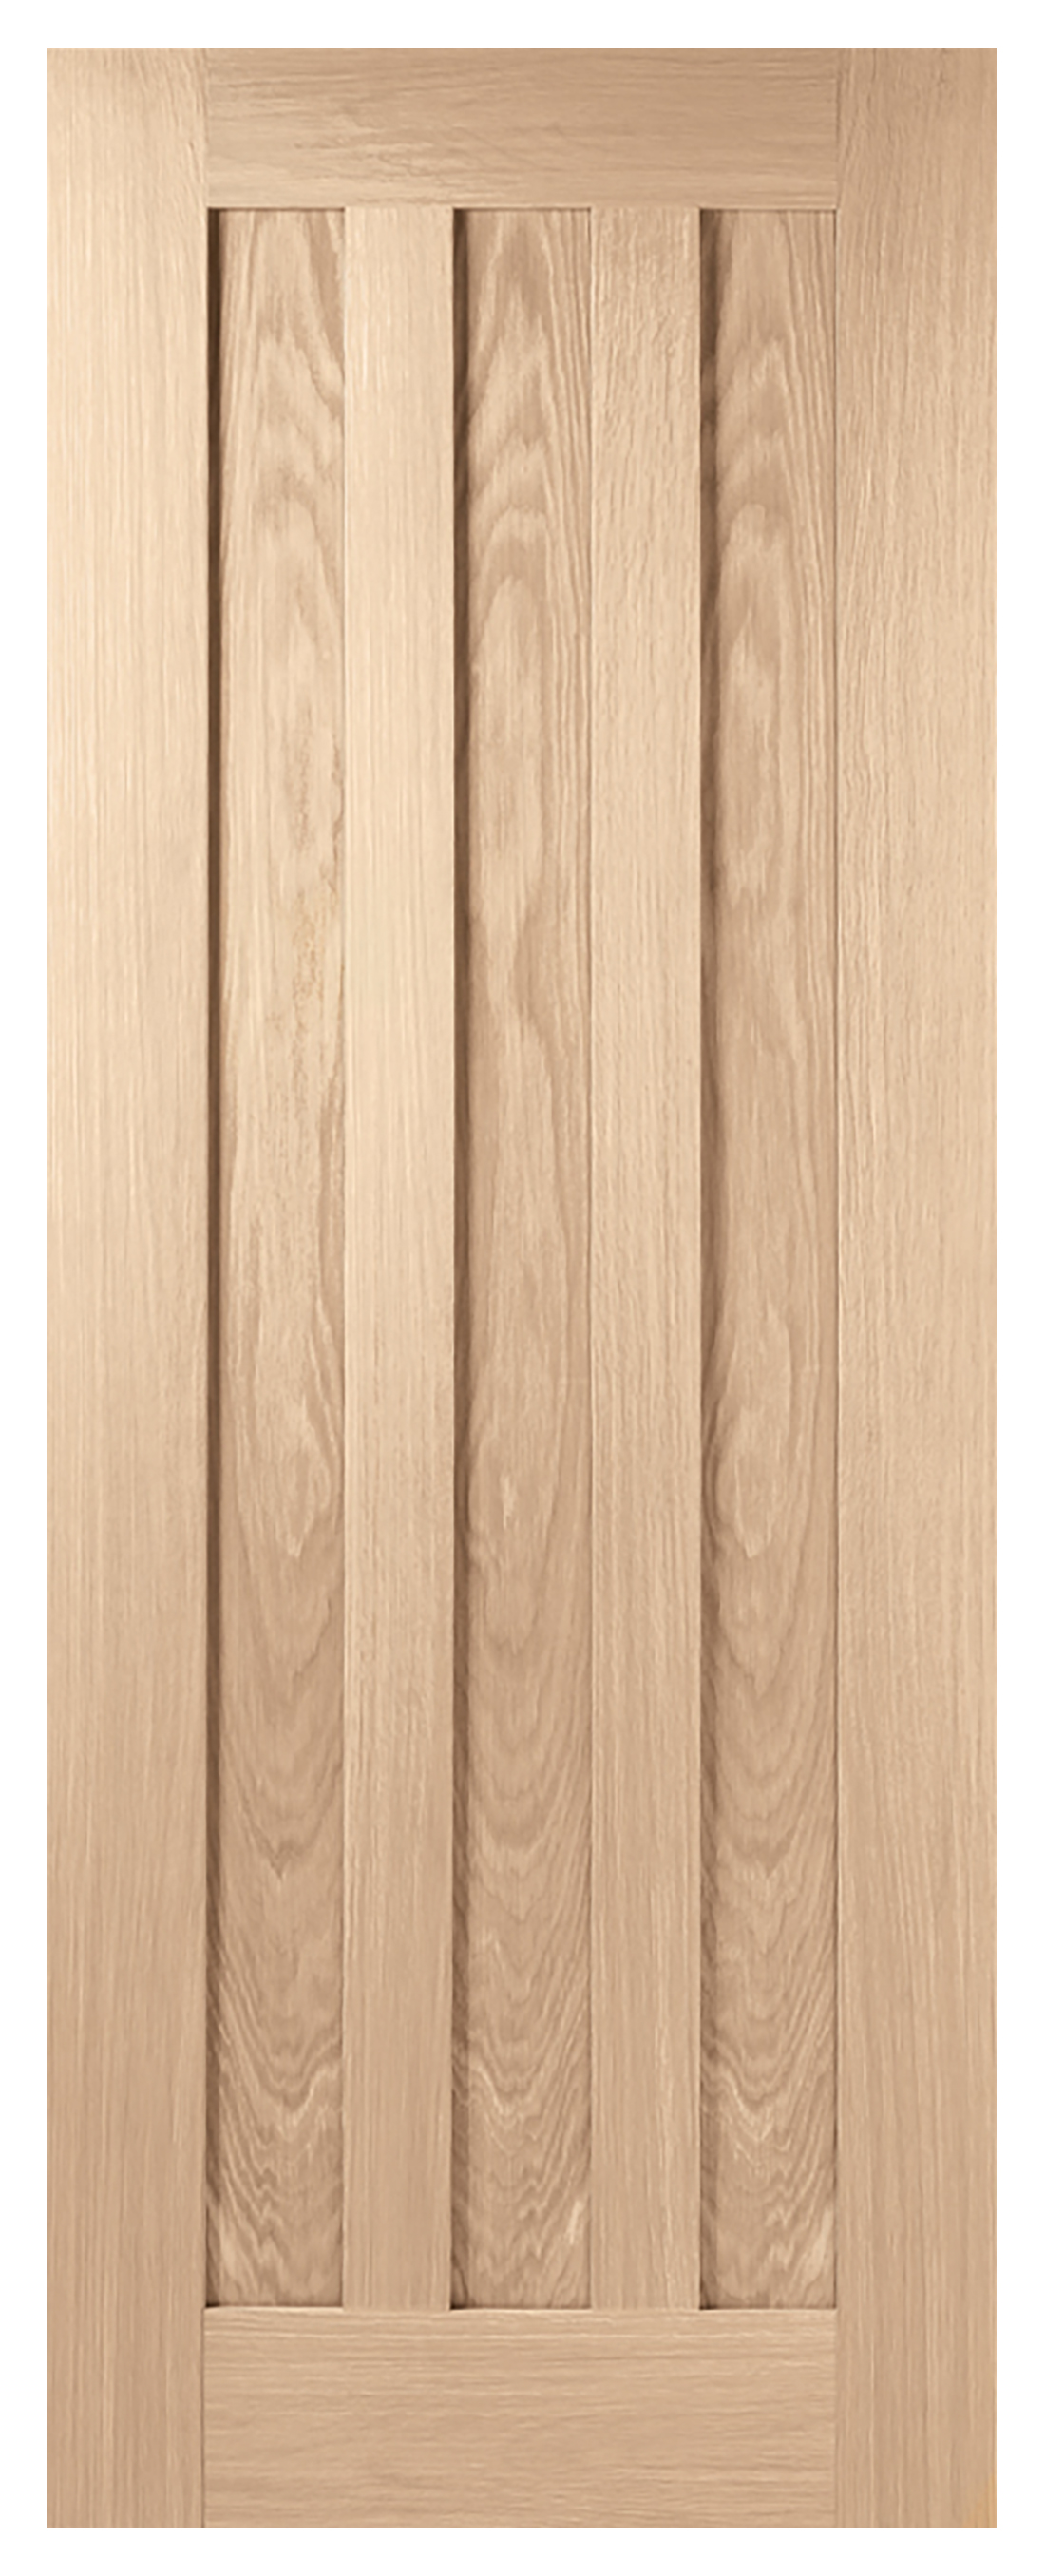 Image of LPD Internal Idaho 3 Panel Unfinished Oak Solid Core Door - 762 x 1981mm